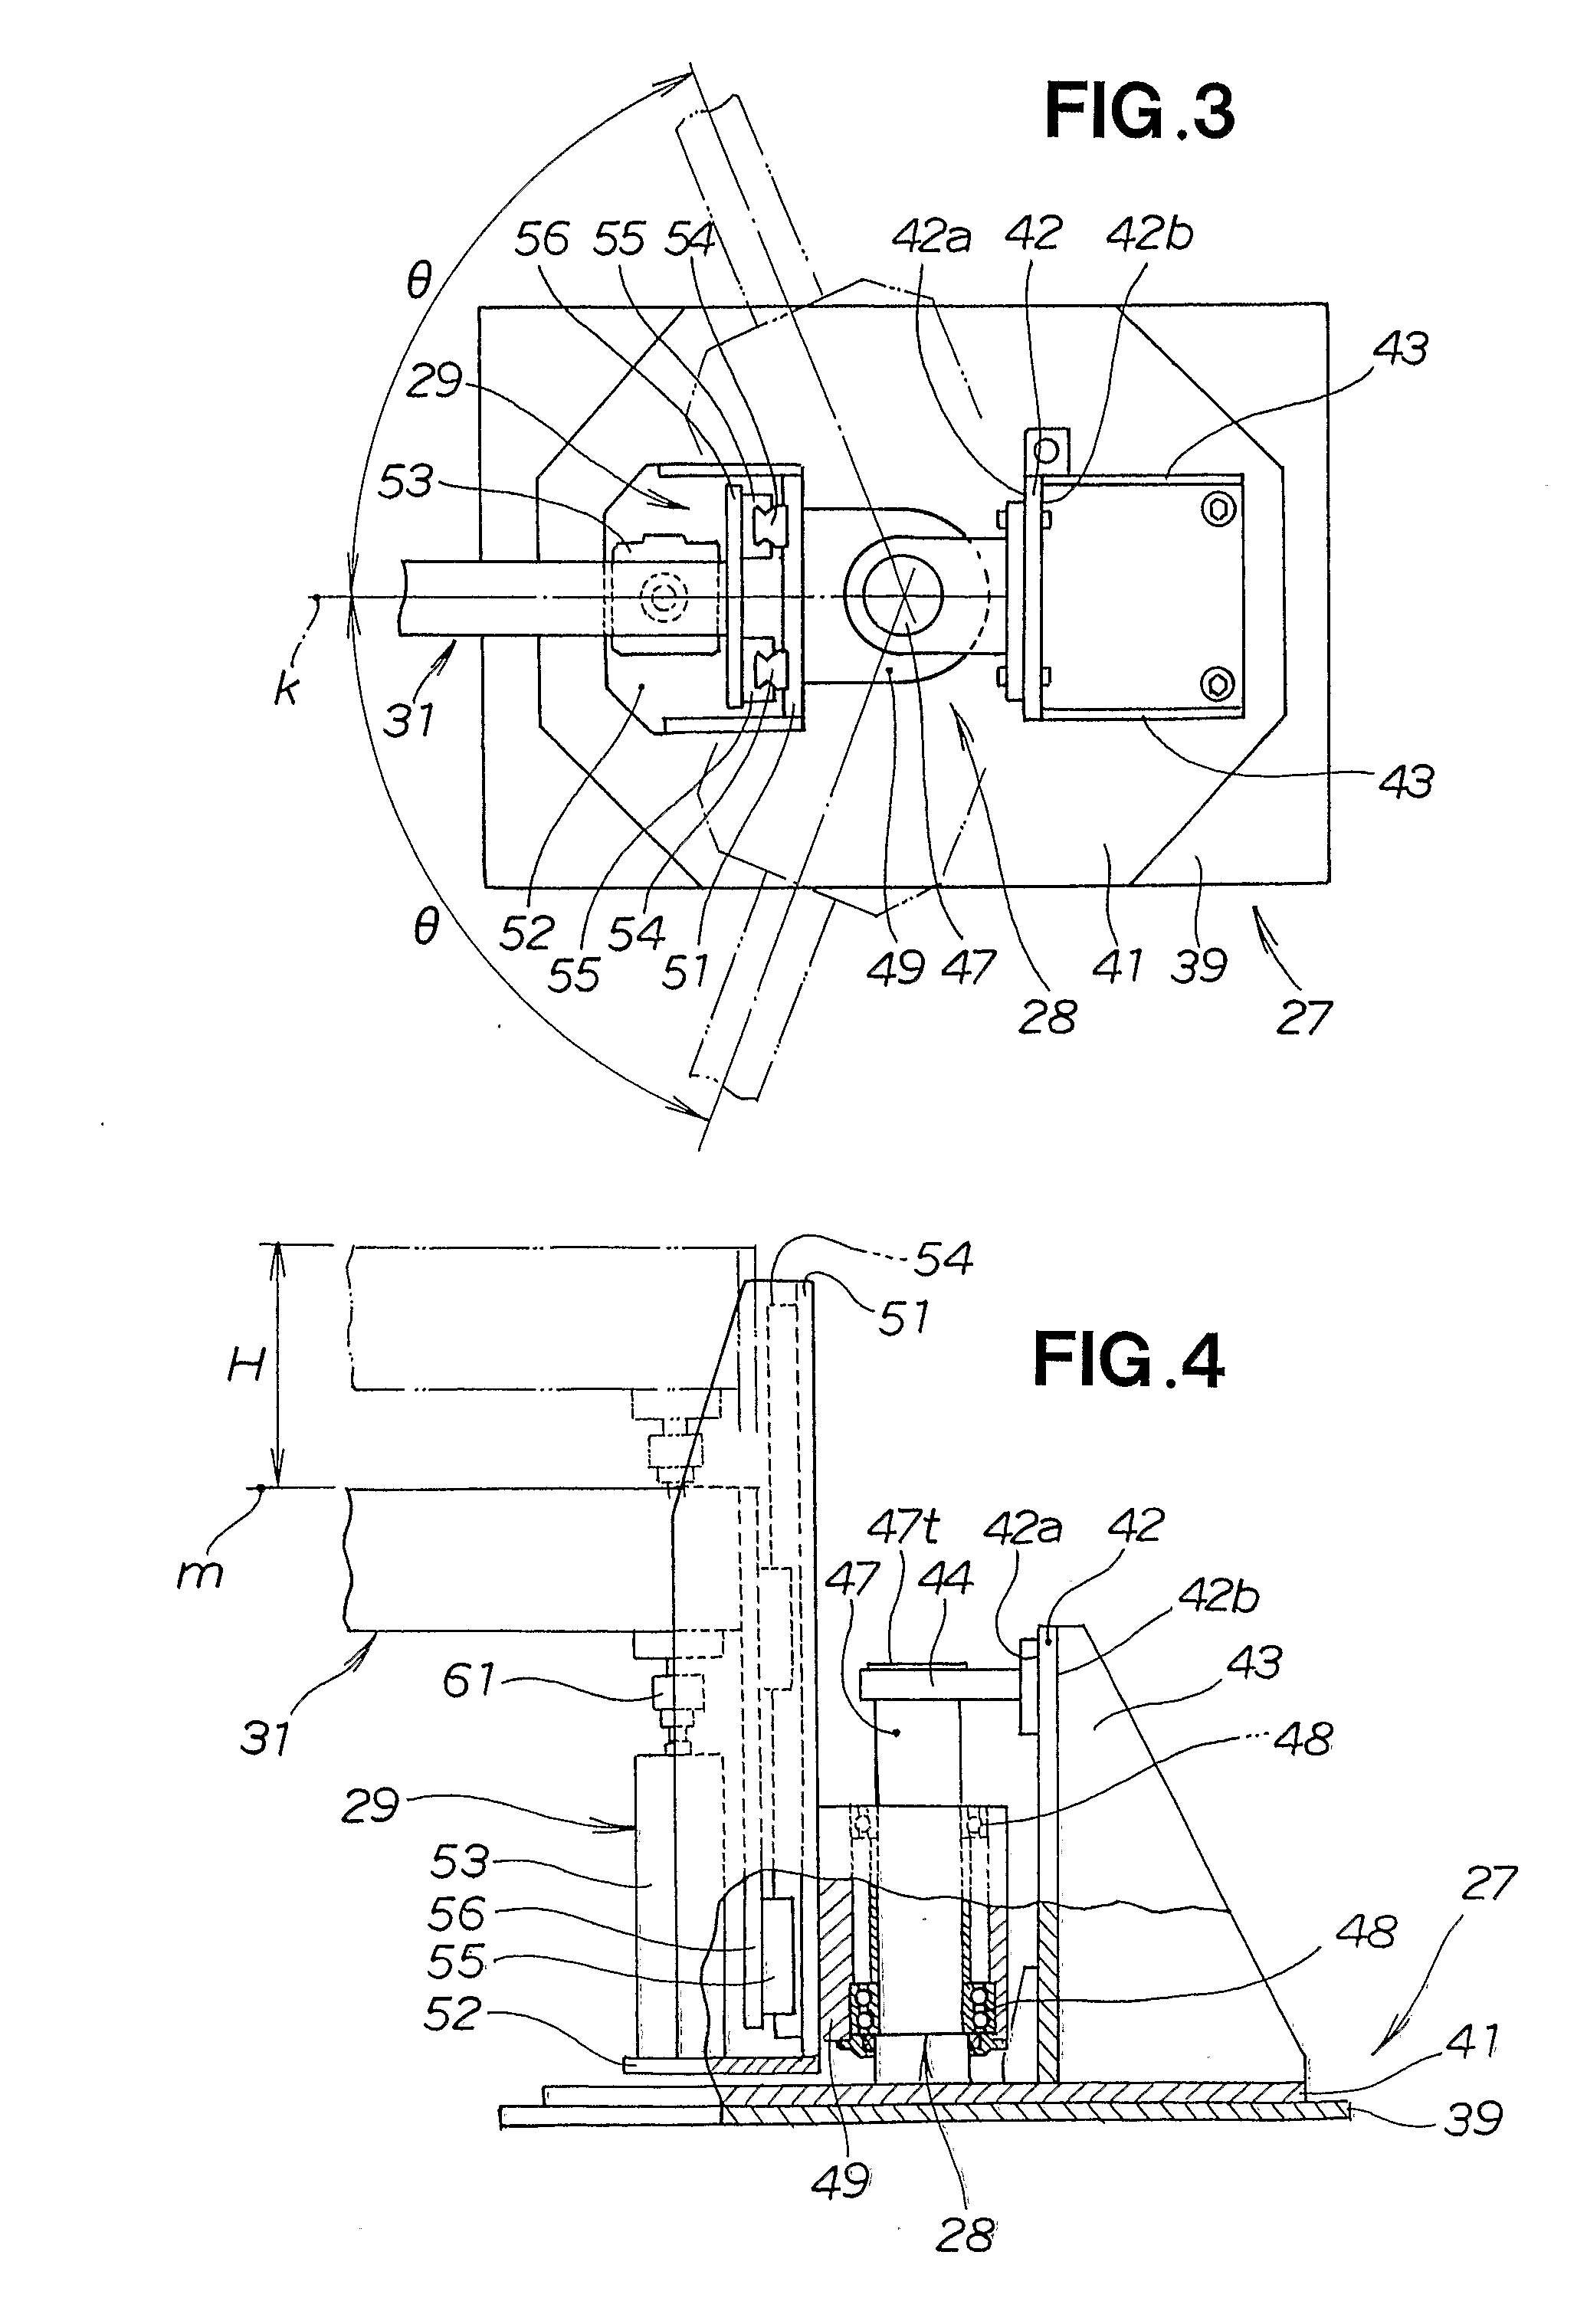 Work seat apparatus